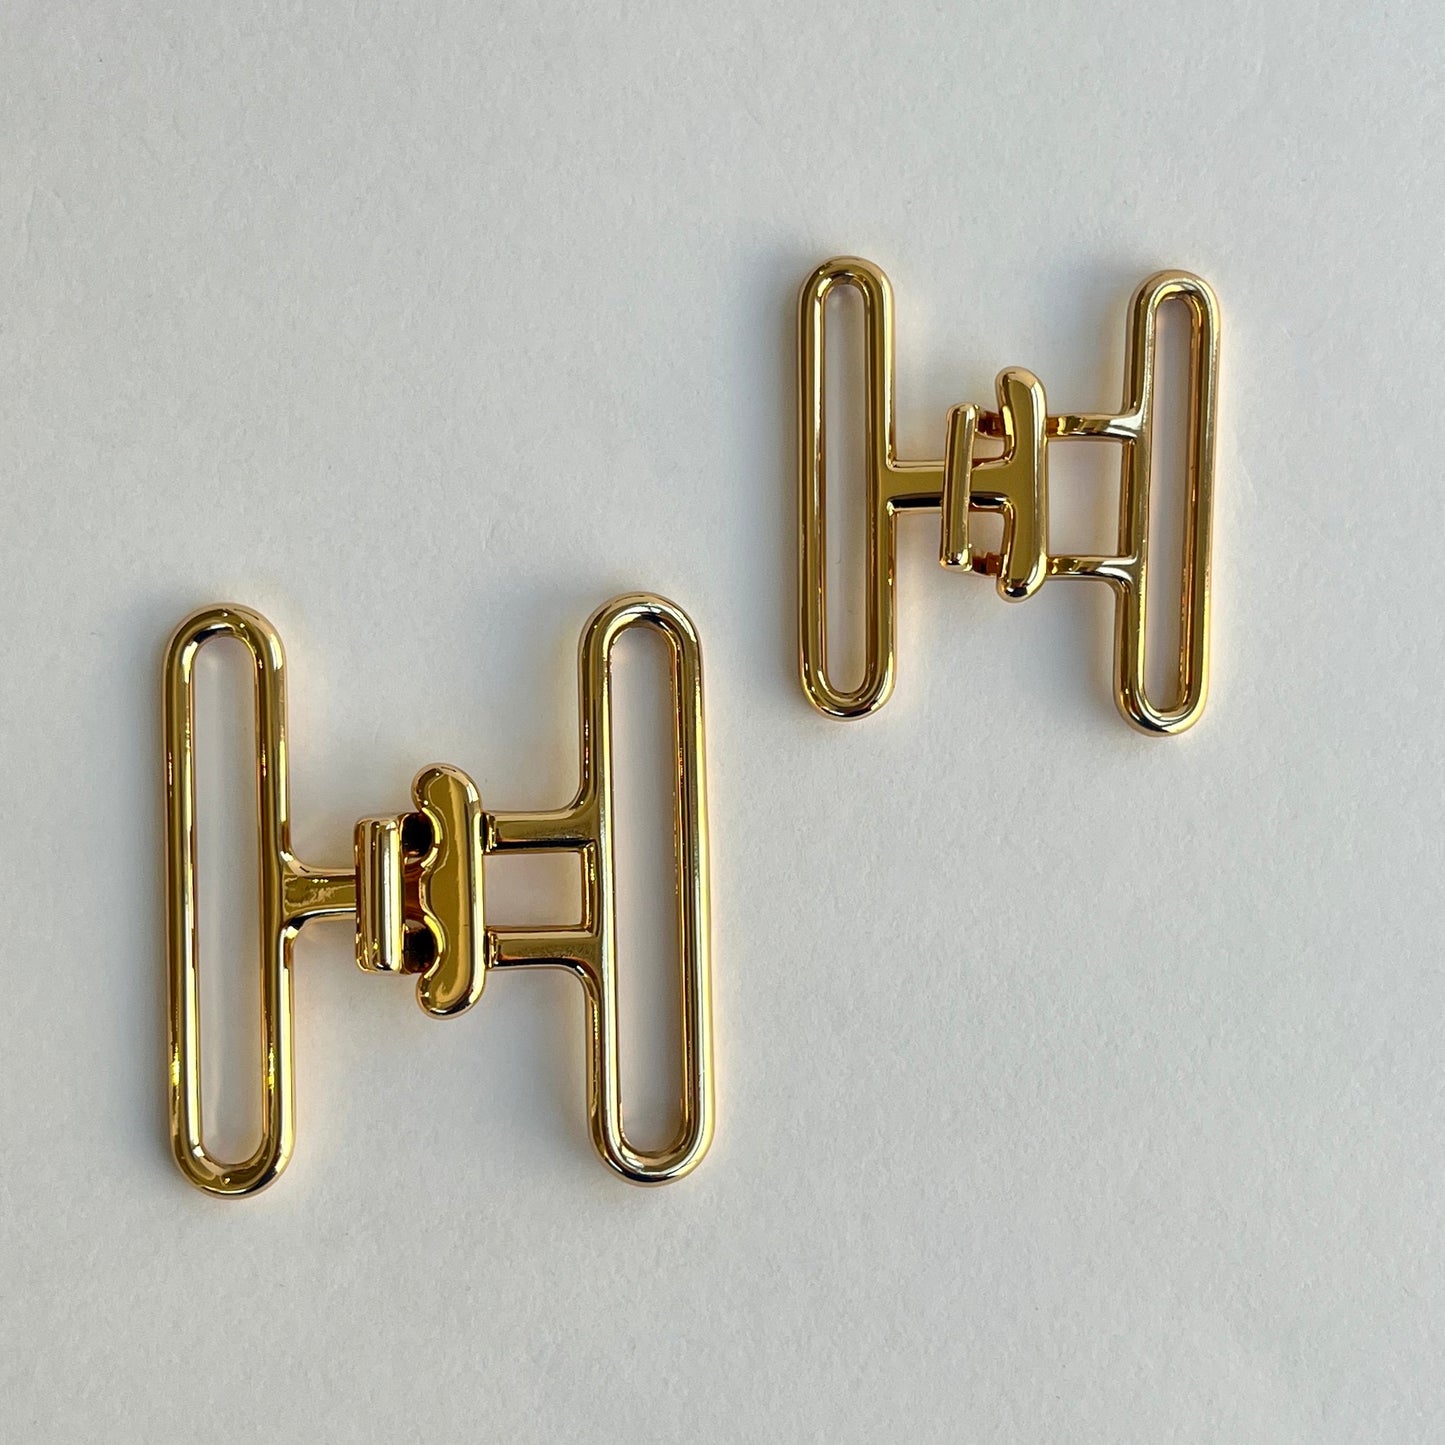 Gold T-Bar Tension buckle - 2 sizes: 4cm & 5cm, add a fun elastic to create a cinch wasp belt.